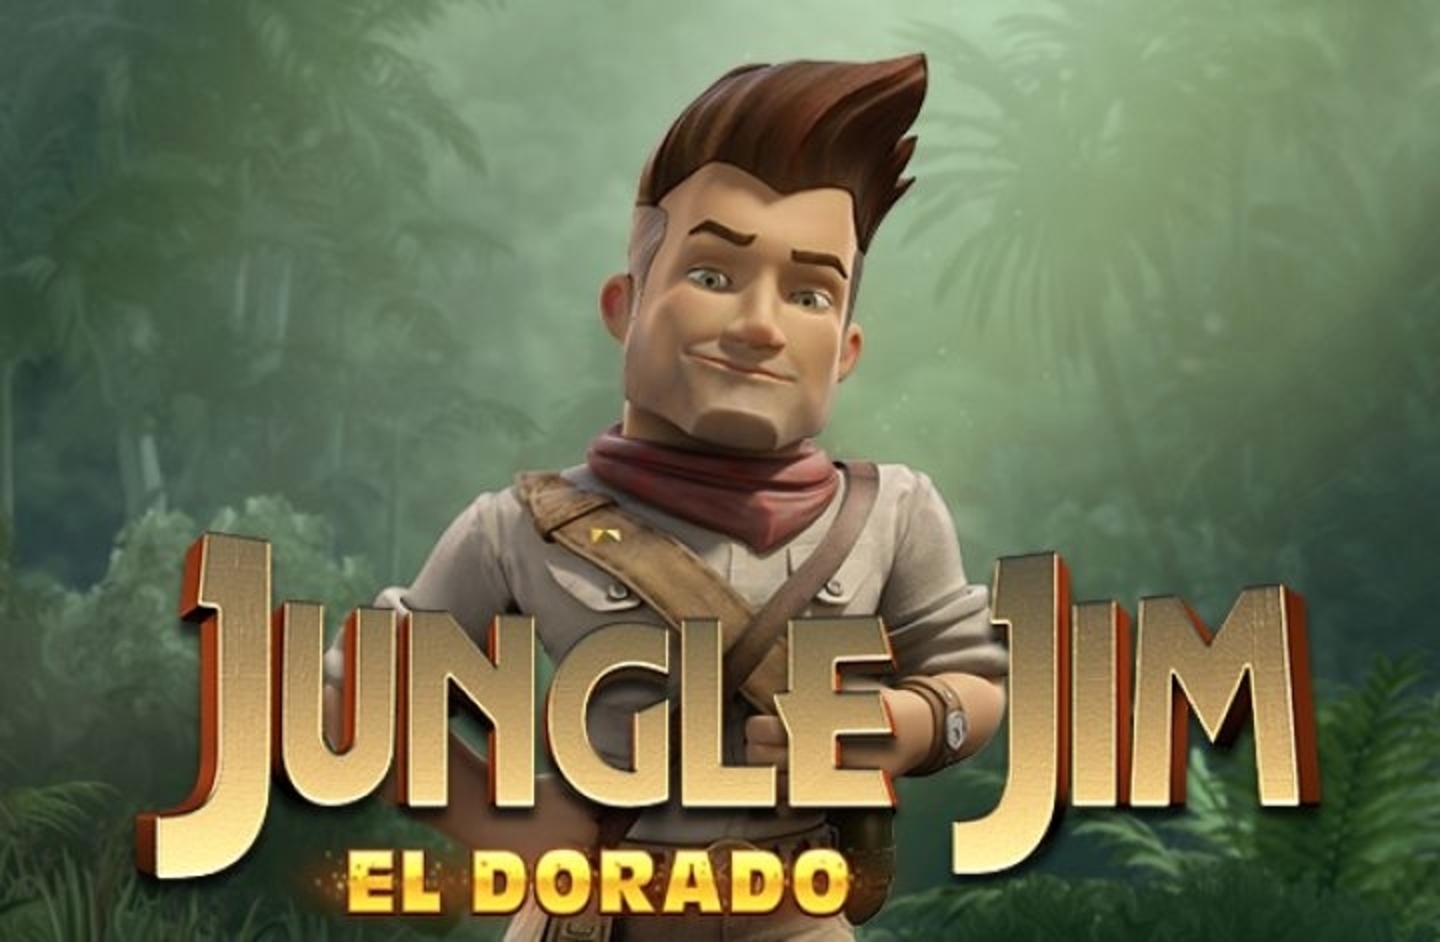 The Jungle Jim El Dorado Online Slot Demo Game by Microgaming